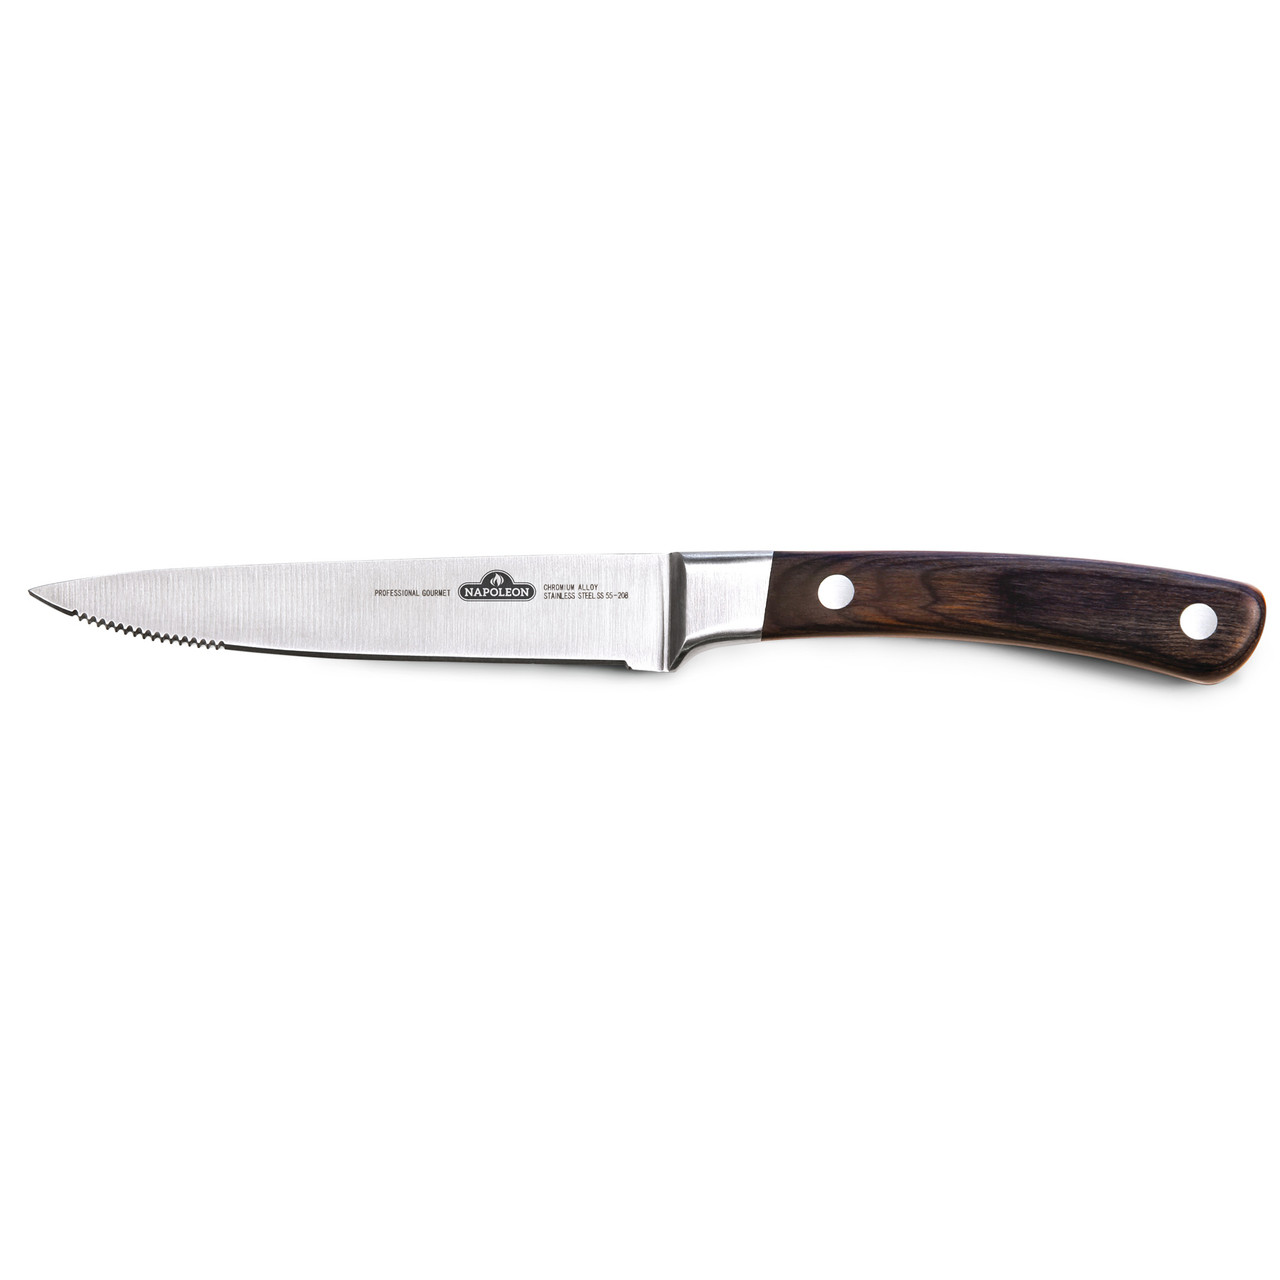 Napoleon Premium Cutting Board and Knife Set